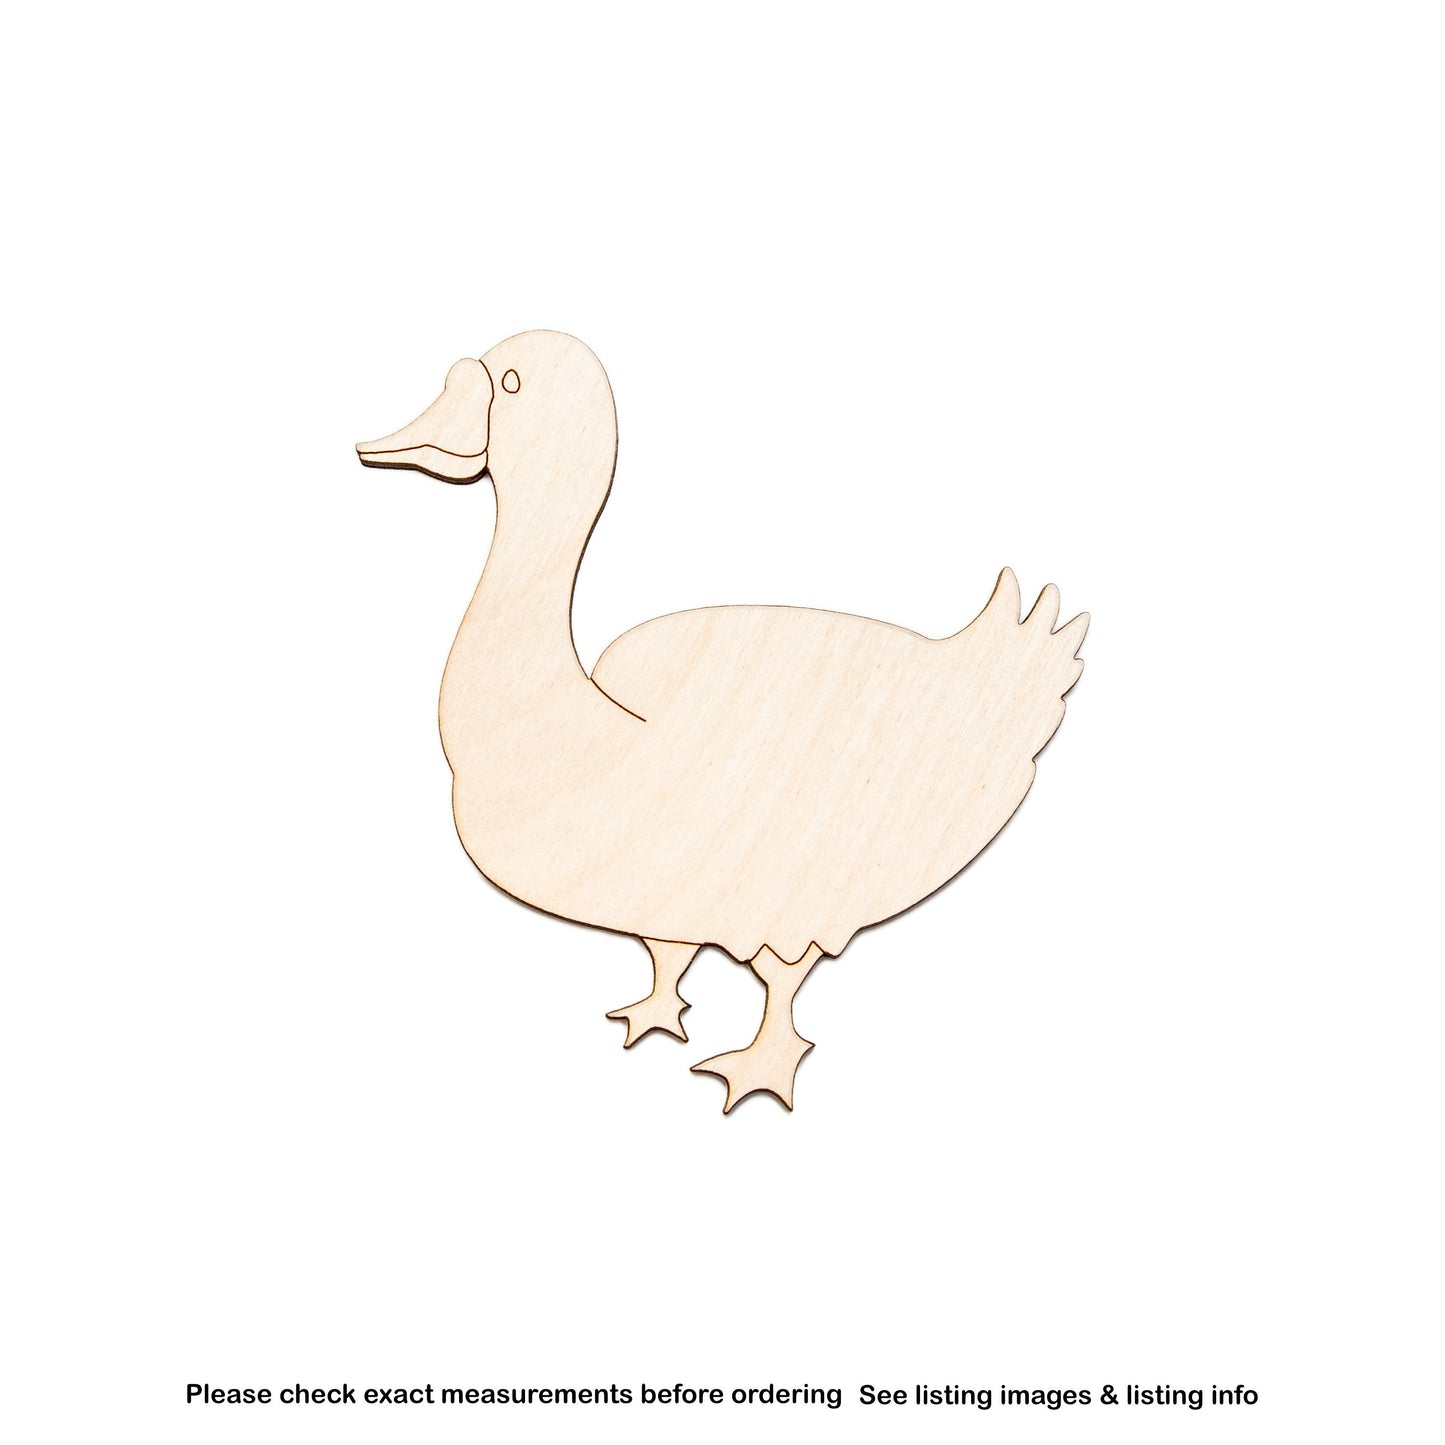 Goose-Wood Cutout-Cute Goose Decor-Farm Animals-Wood Goose Shape-Various Sizes-DIY Crafts-Kids Decor-Animal Theme Crafts-Cartoon Style Goose